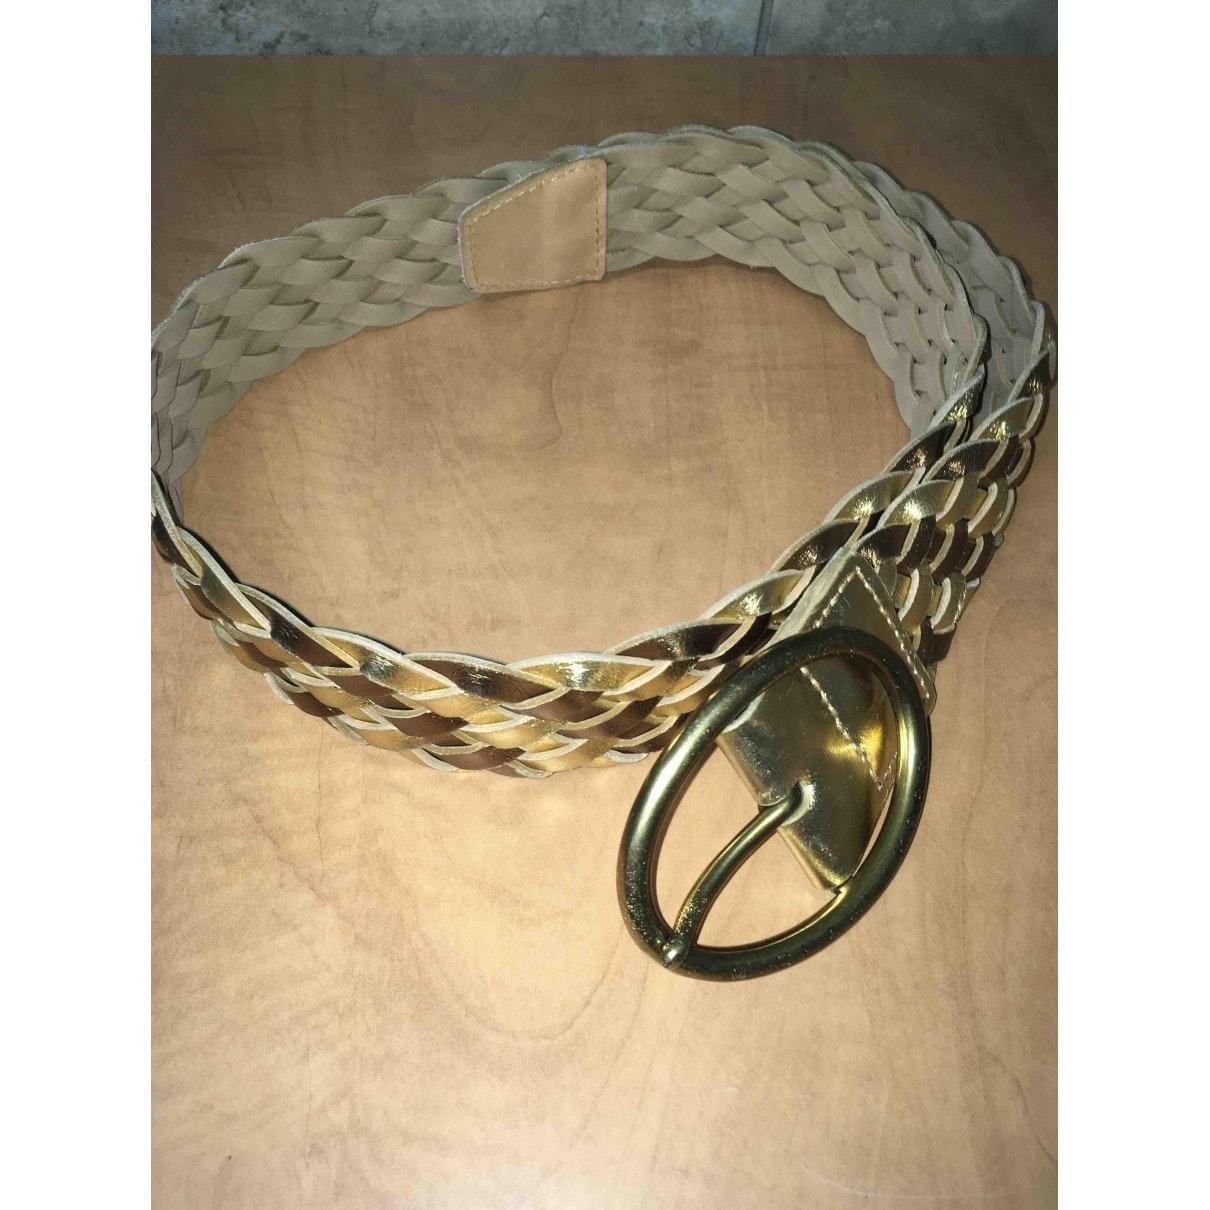 Michael Kors Leather Belt in Gold (Metallic) - Lyst